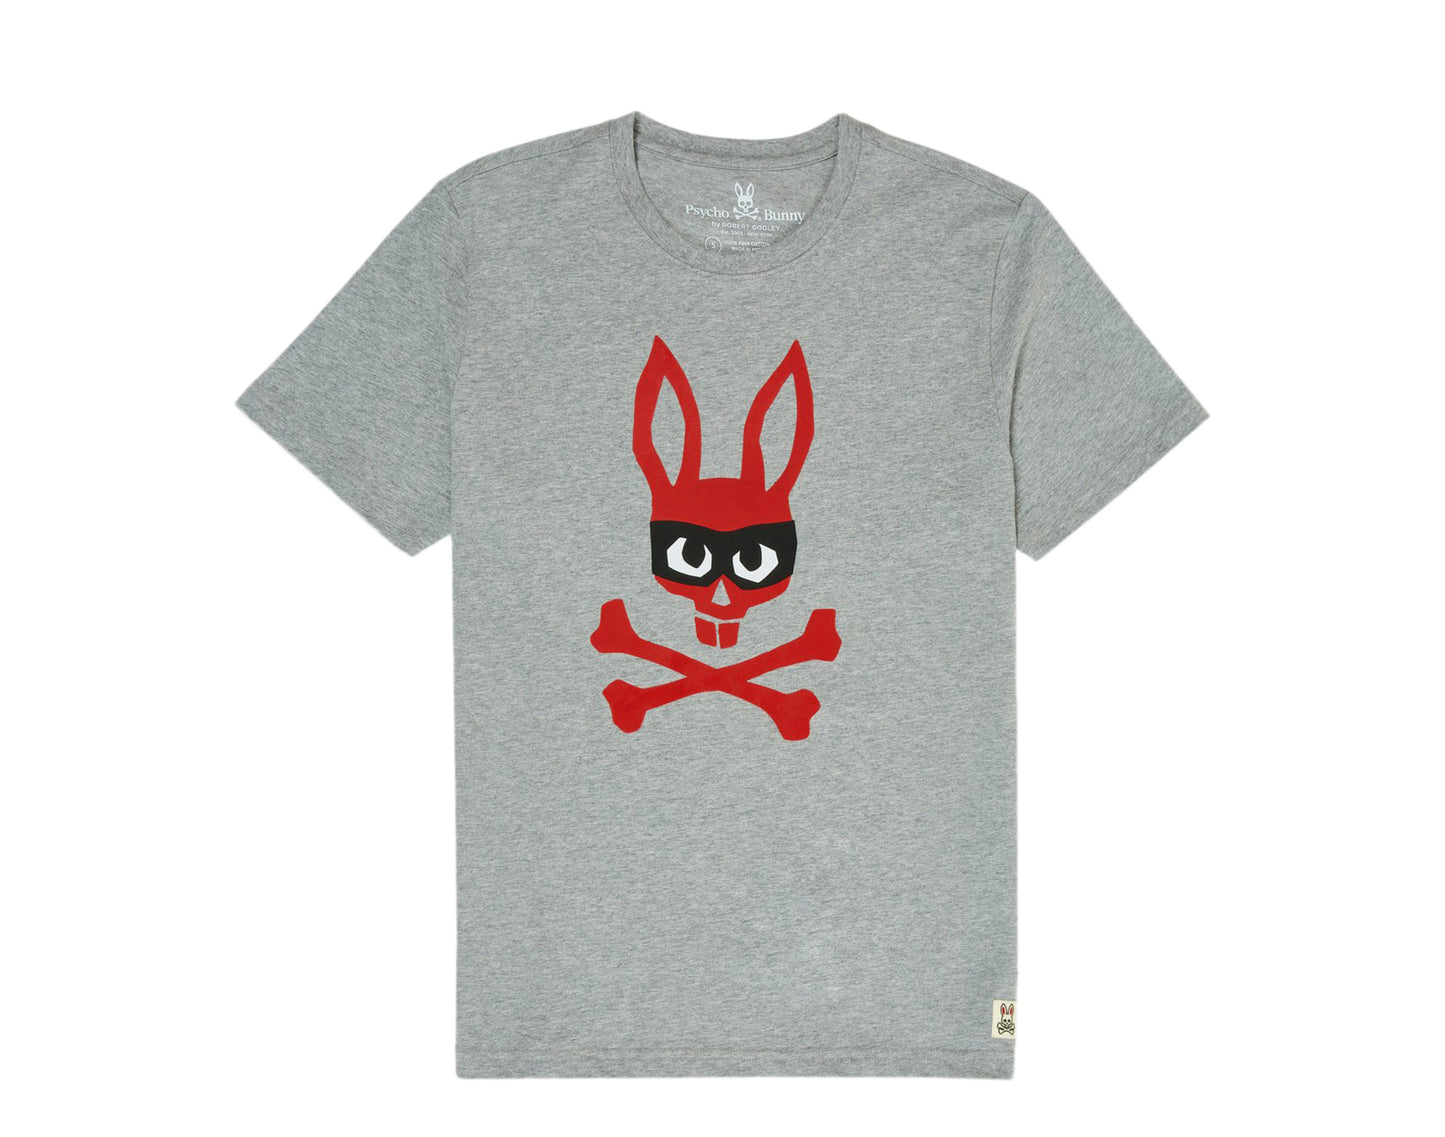 Psycho Bunny Mischief Zorro Bunny Graphic Heather Grey Men's Tee Shirt B6U526G1PC-HGY